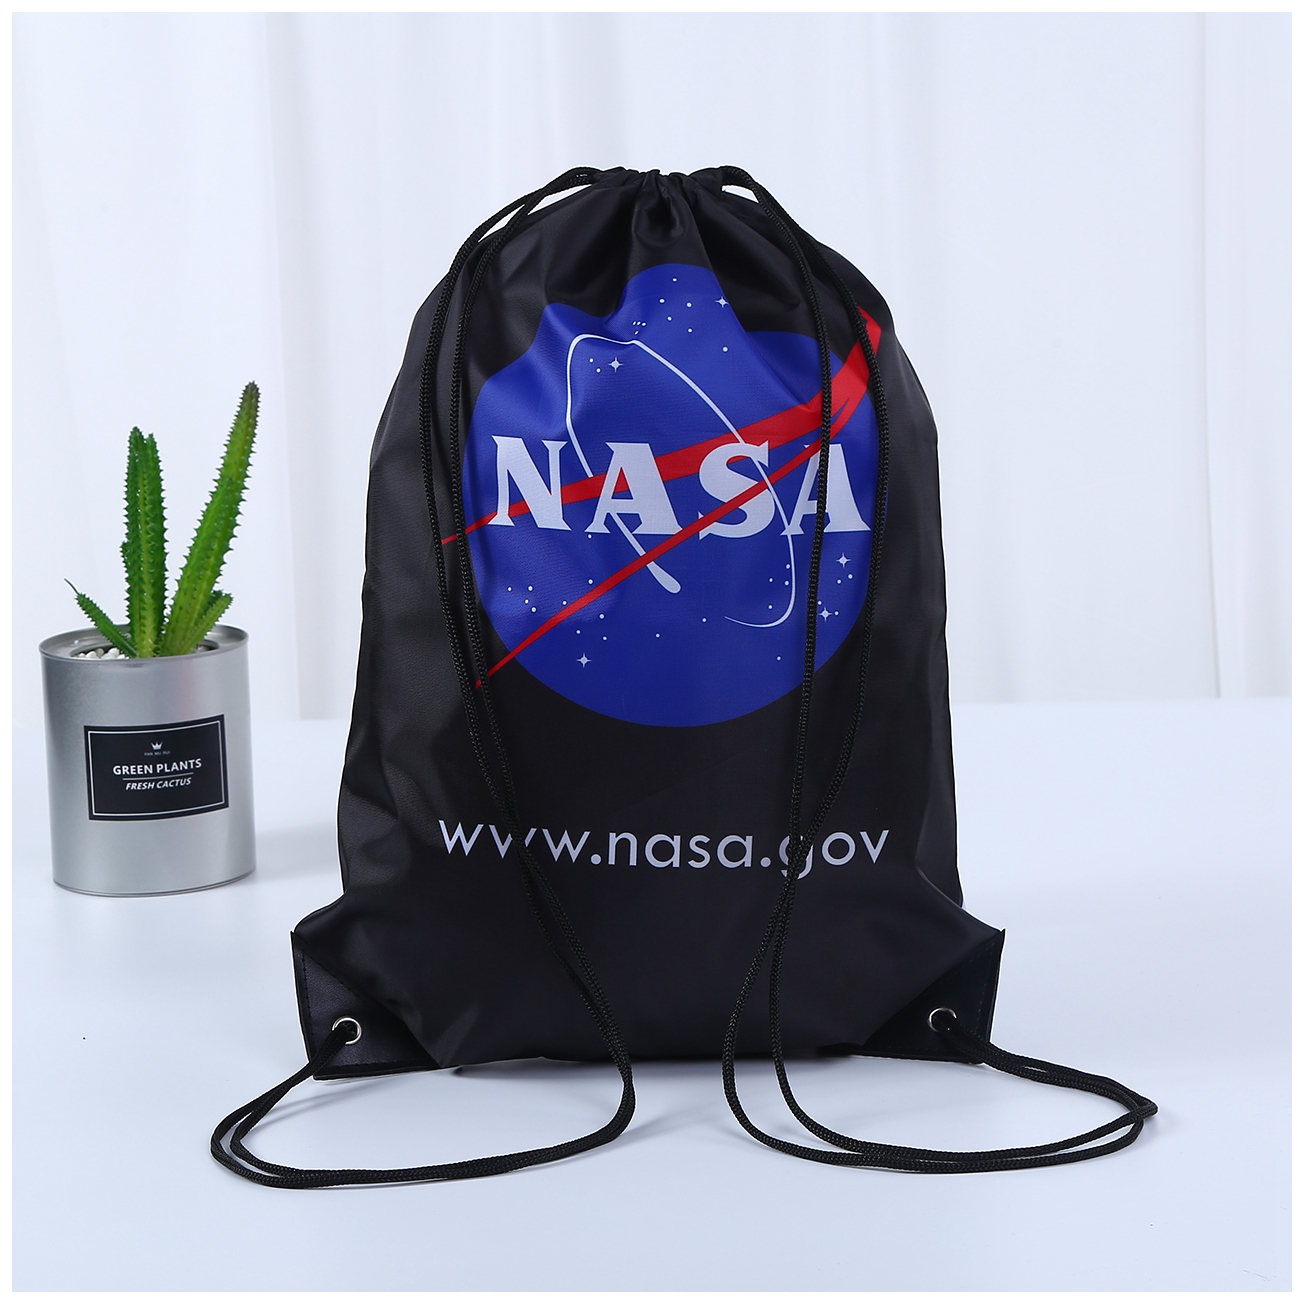 Customized NASA Drawstring Bag